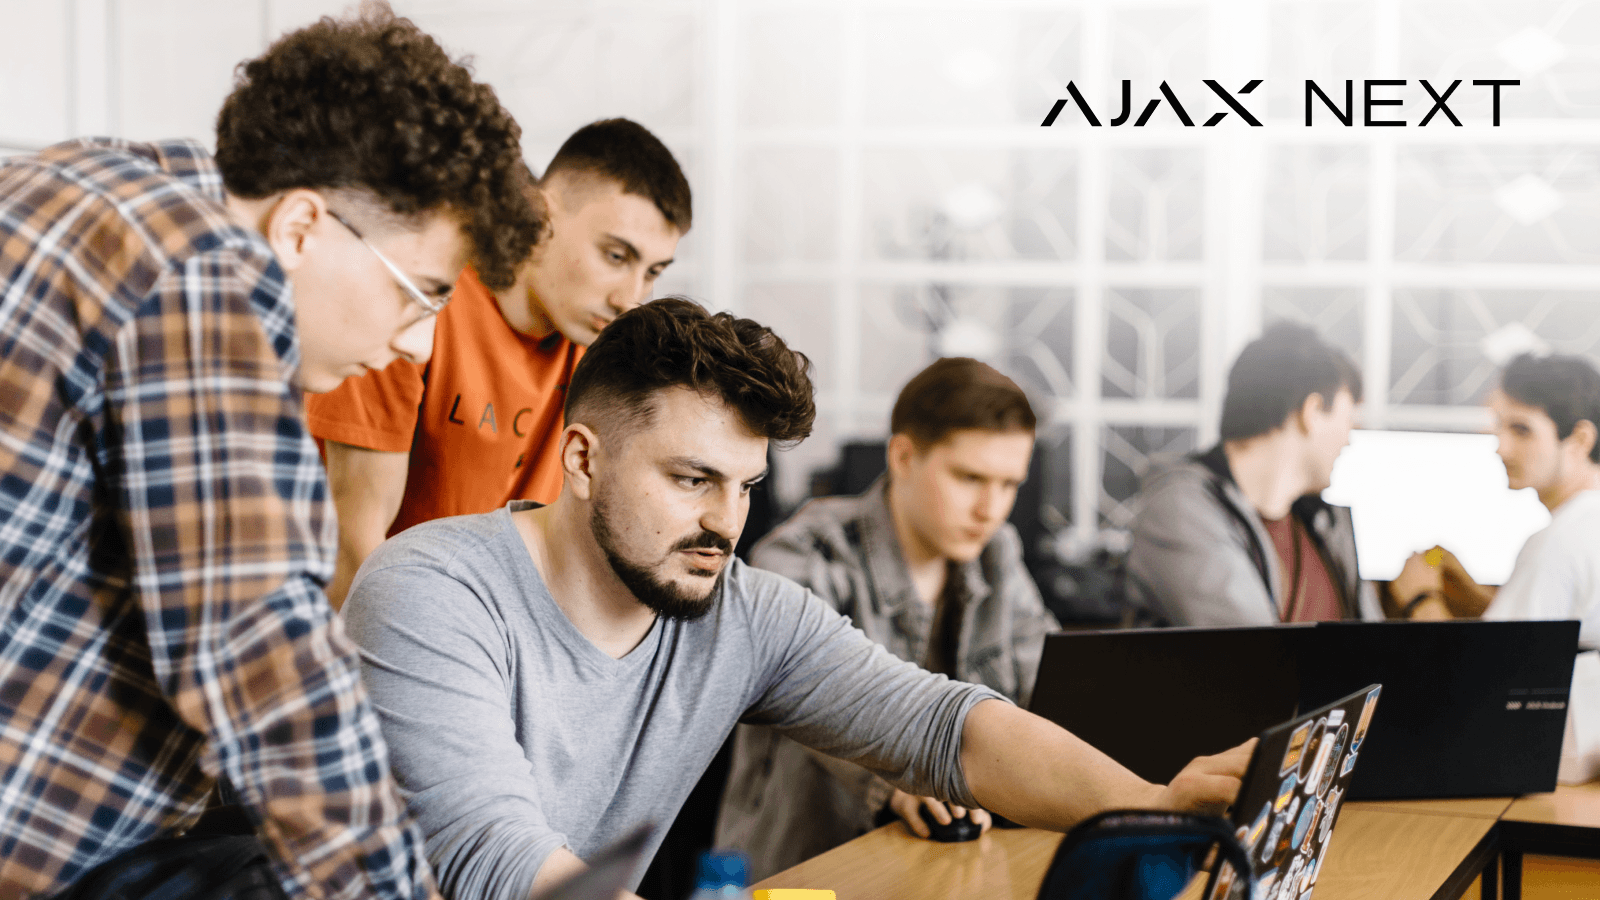 Ajax Systems lancia una preziosa iniziativa educativa  Ajax Next